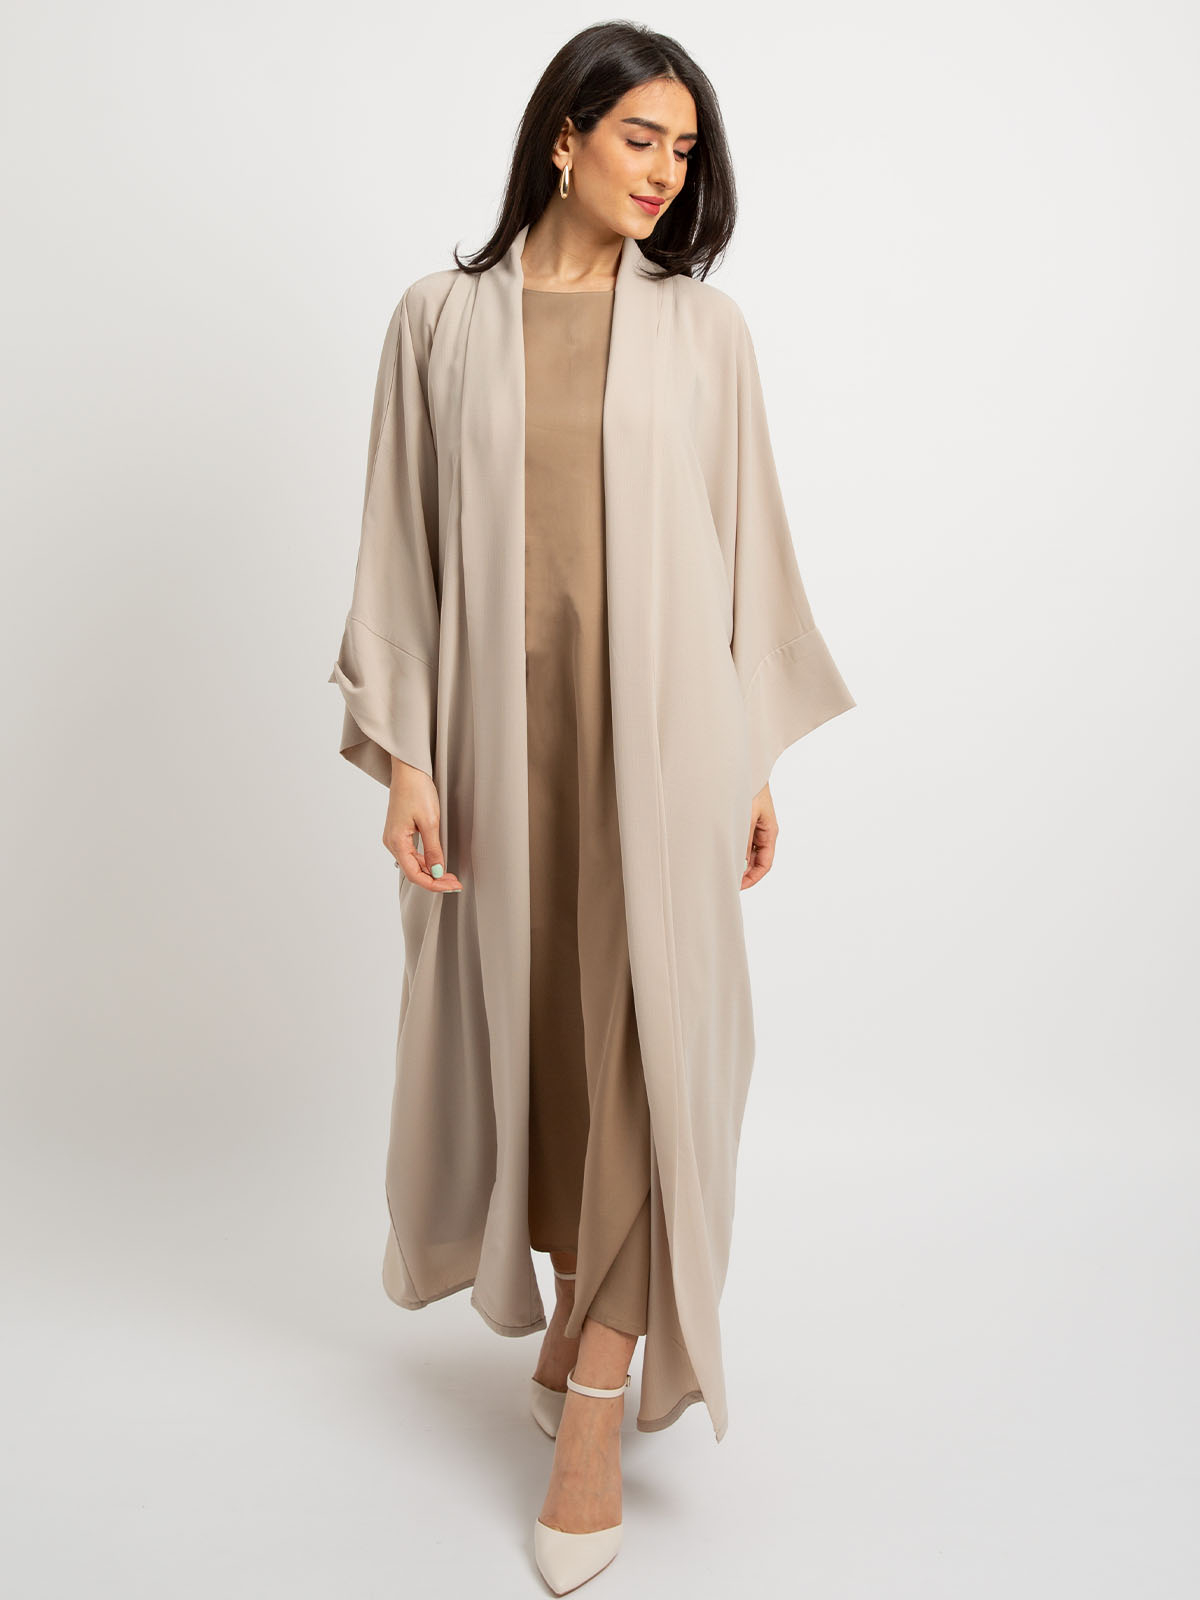 Kaafmeem women clothing wide cut beige color open long kimono abaya in lightweight fabric